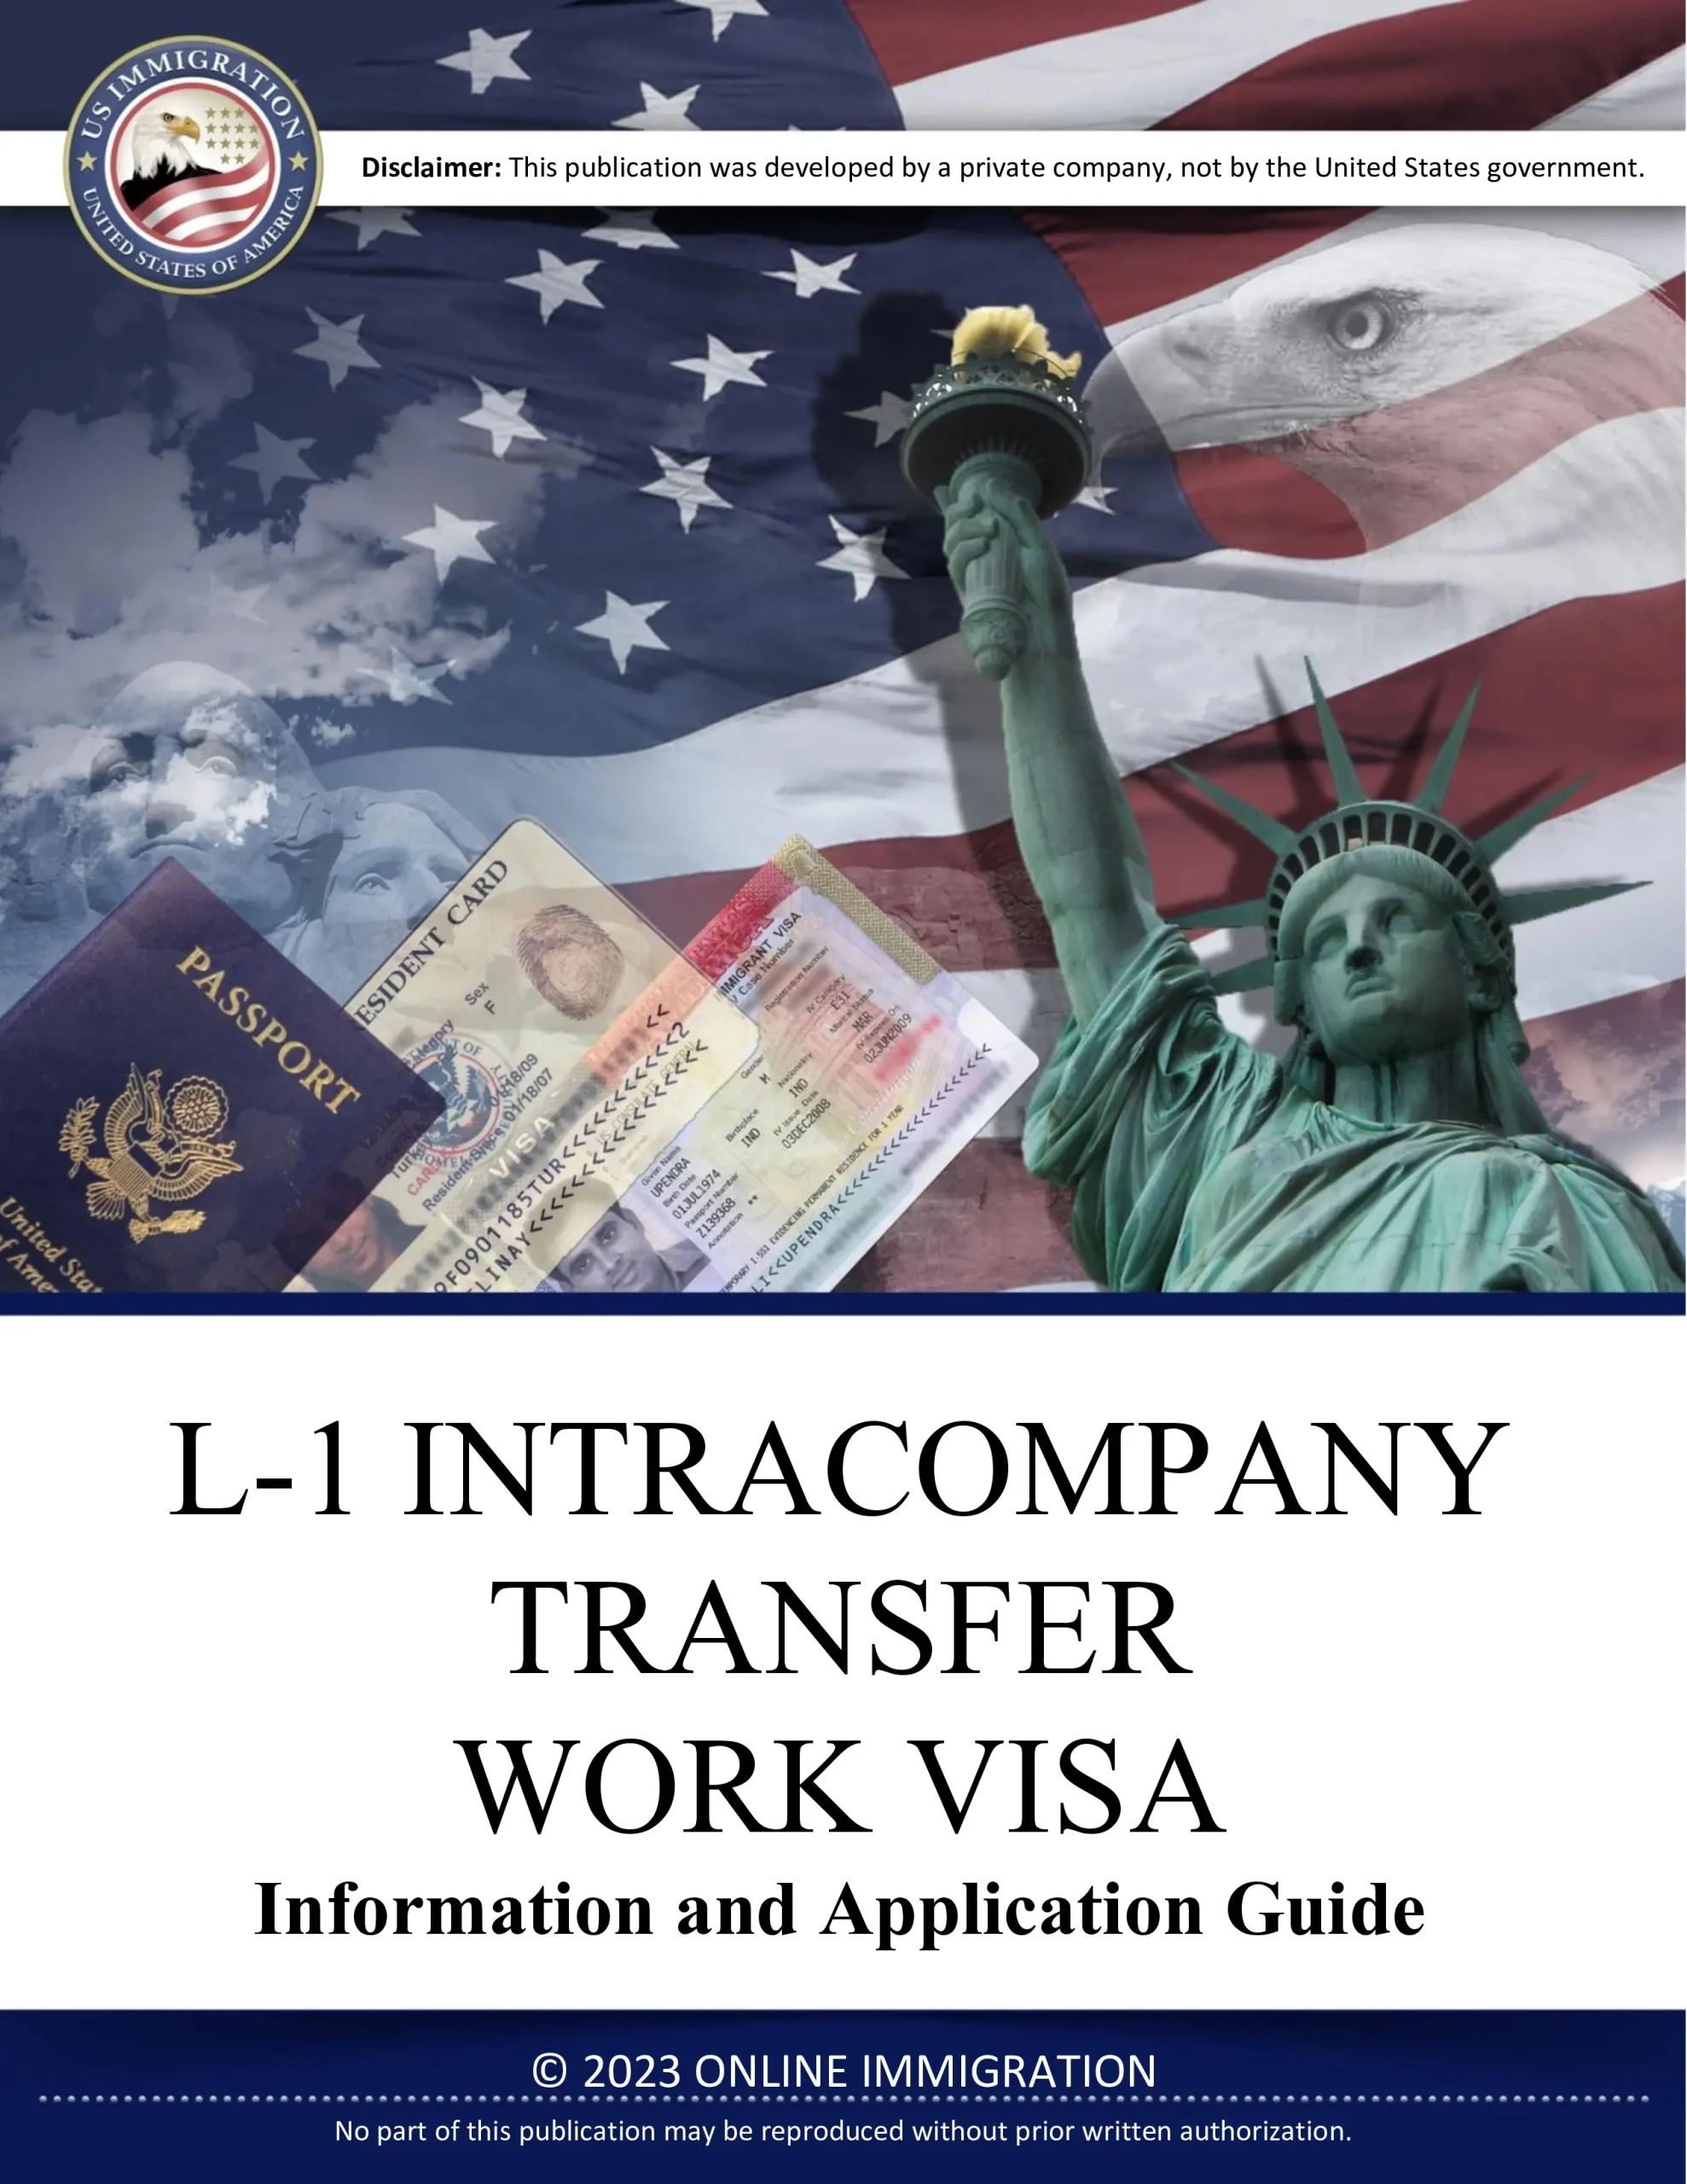 L-1 Intracompany Transfer Work Visa